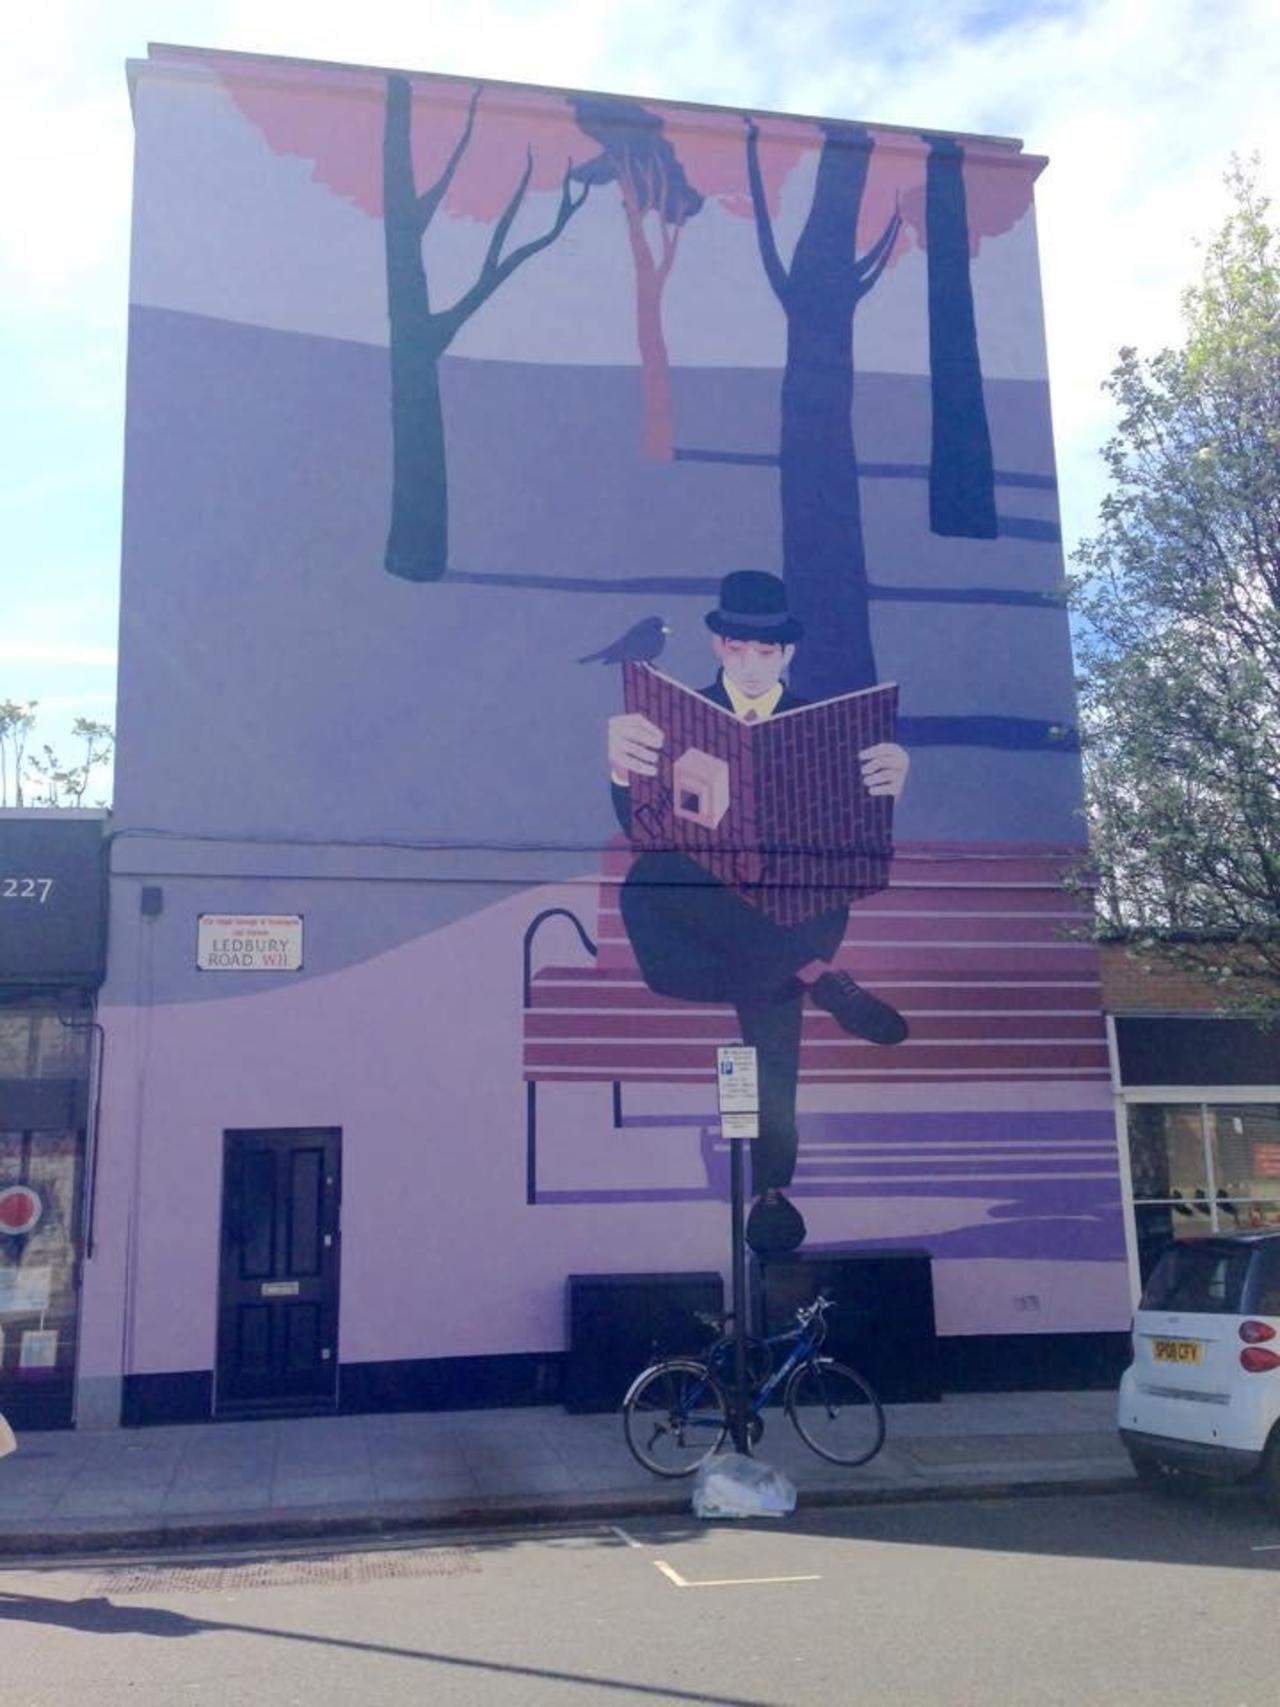 Giant mural in Notting Hill, London. Have a look: http://bit.ly/NottingHillArt #purple #mural https://t.co/LOKW6KiC8n